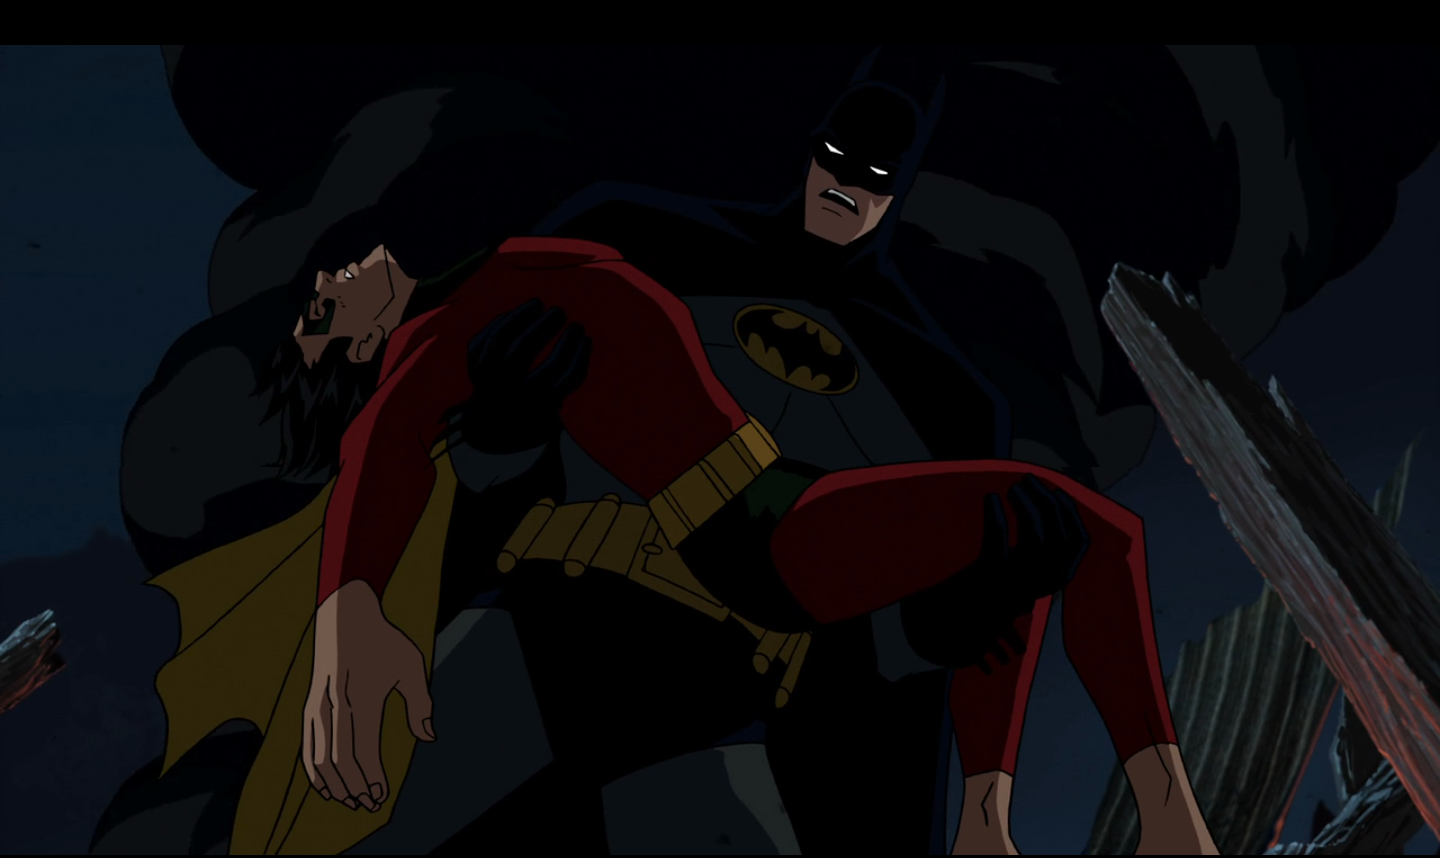 Batman Under The Red Hood HD Wallpaper Background